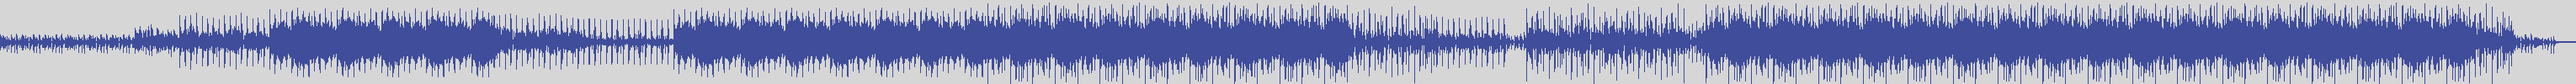 noclouds_chillout [NOC029] Corall Bay - Ideale [Original Mix] audio wave form